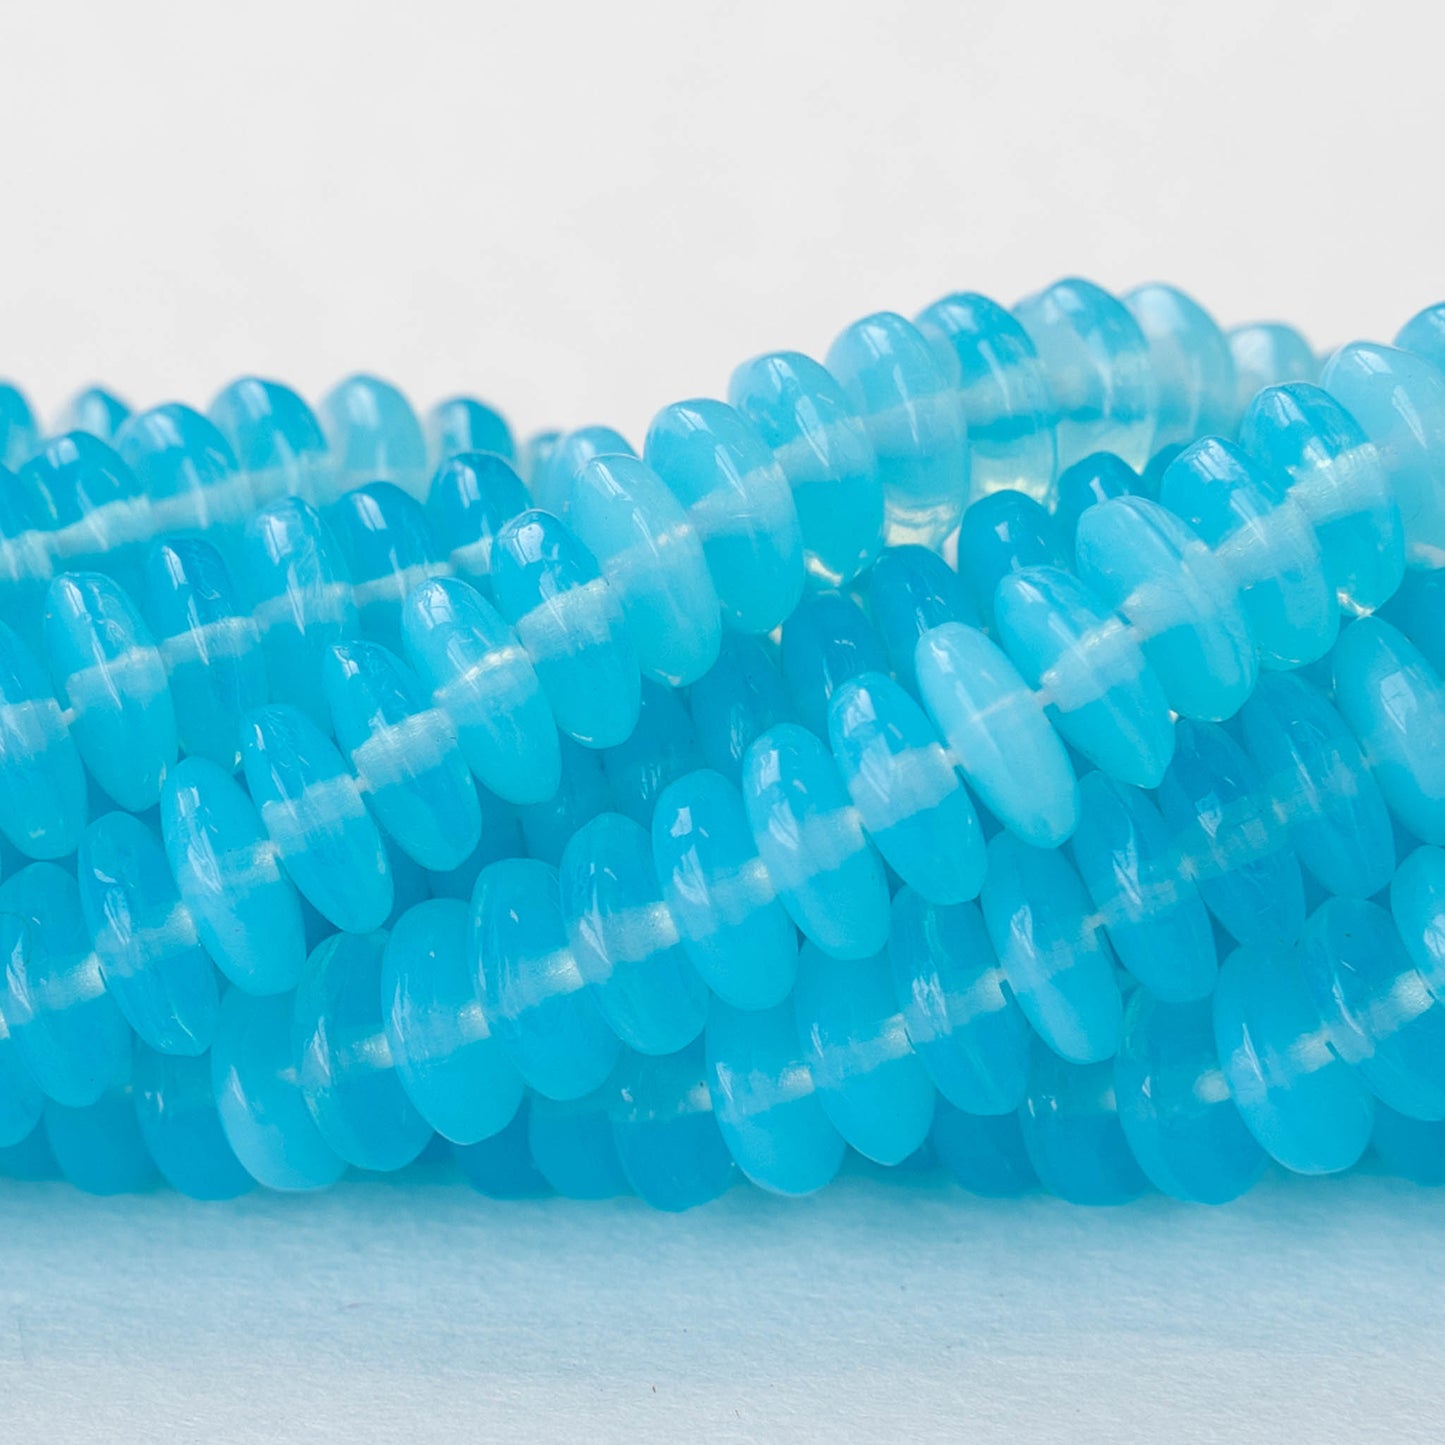 6mm Glass Rondelle Beads - Lt Blue Aqua Opaline - 100 Beads